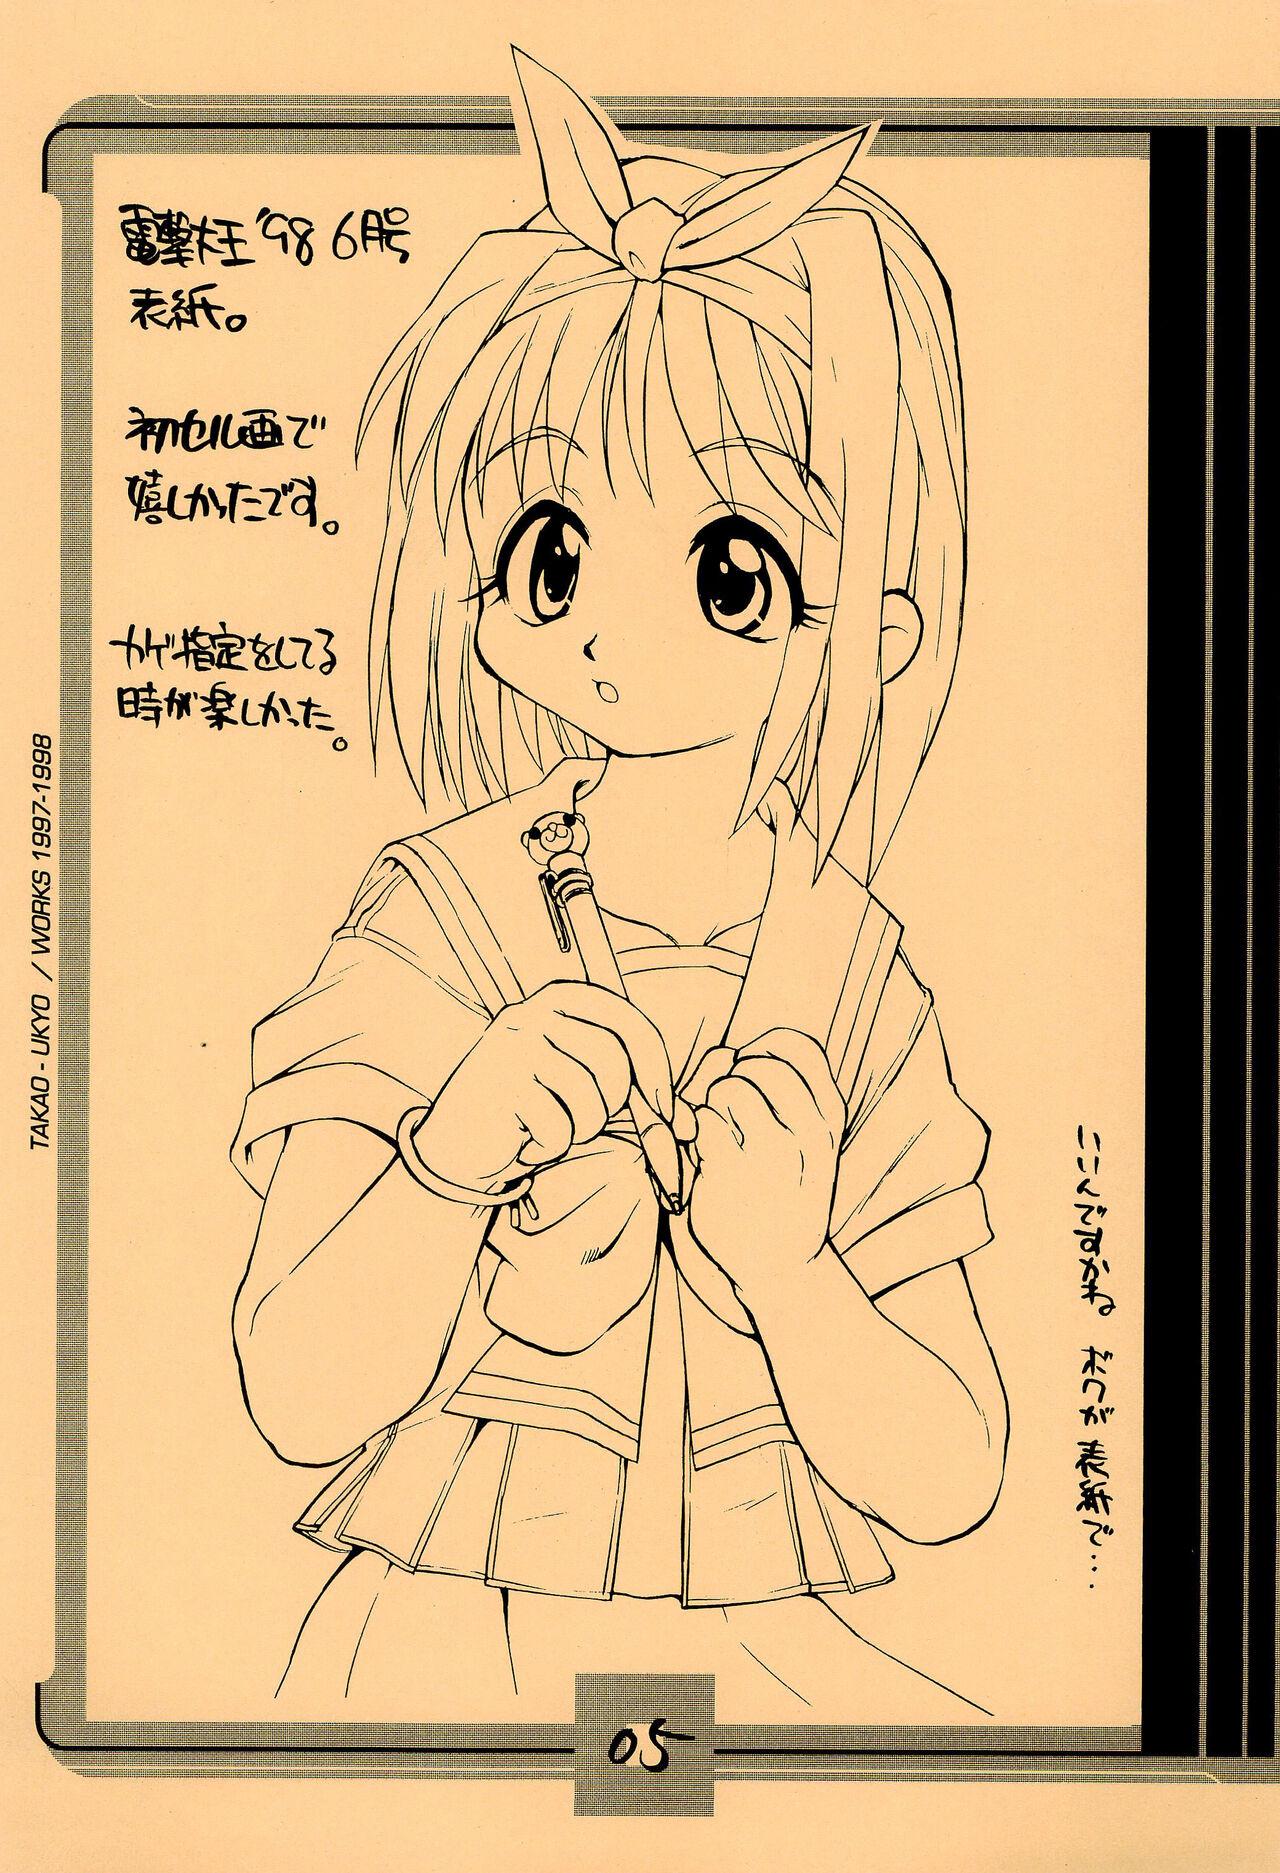 Novinhas Mamagult Katsudou Houkokusho Hikae 1997/11-1998/08 - To heart Fun fun pharmacy 10 carat torte 19yo - Page 5